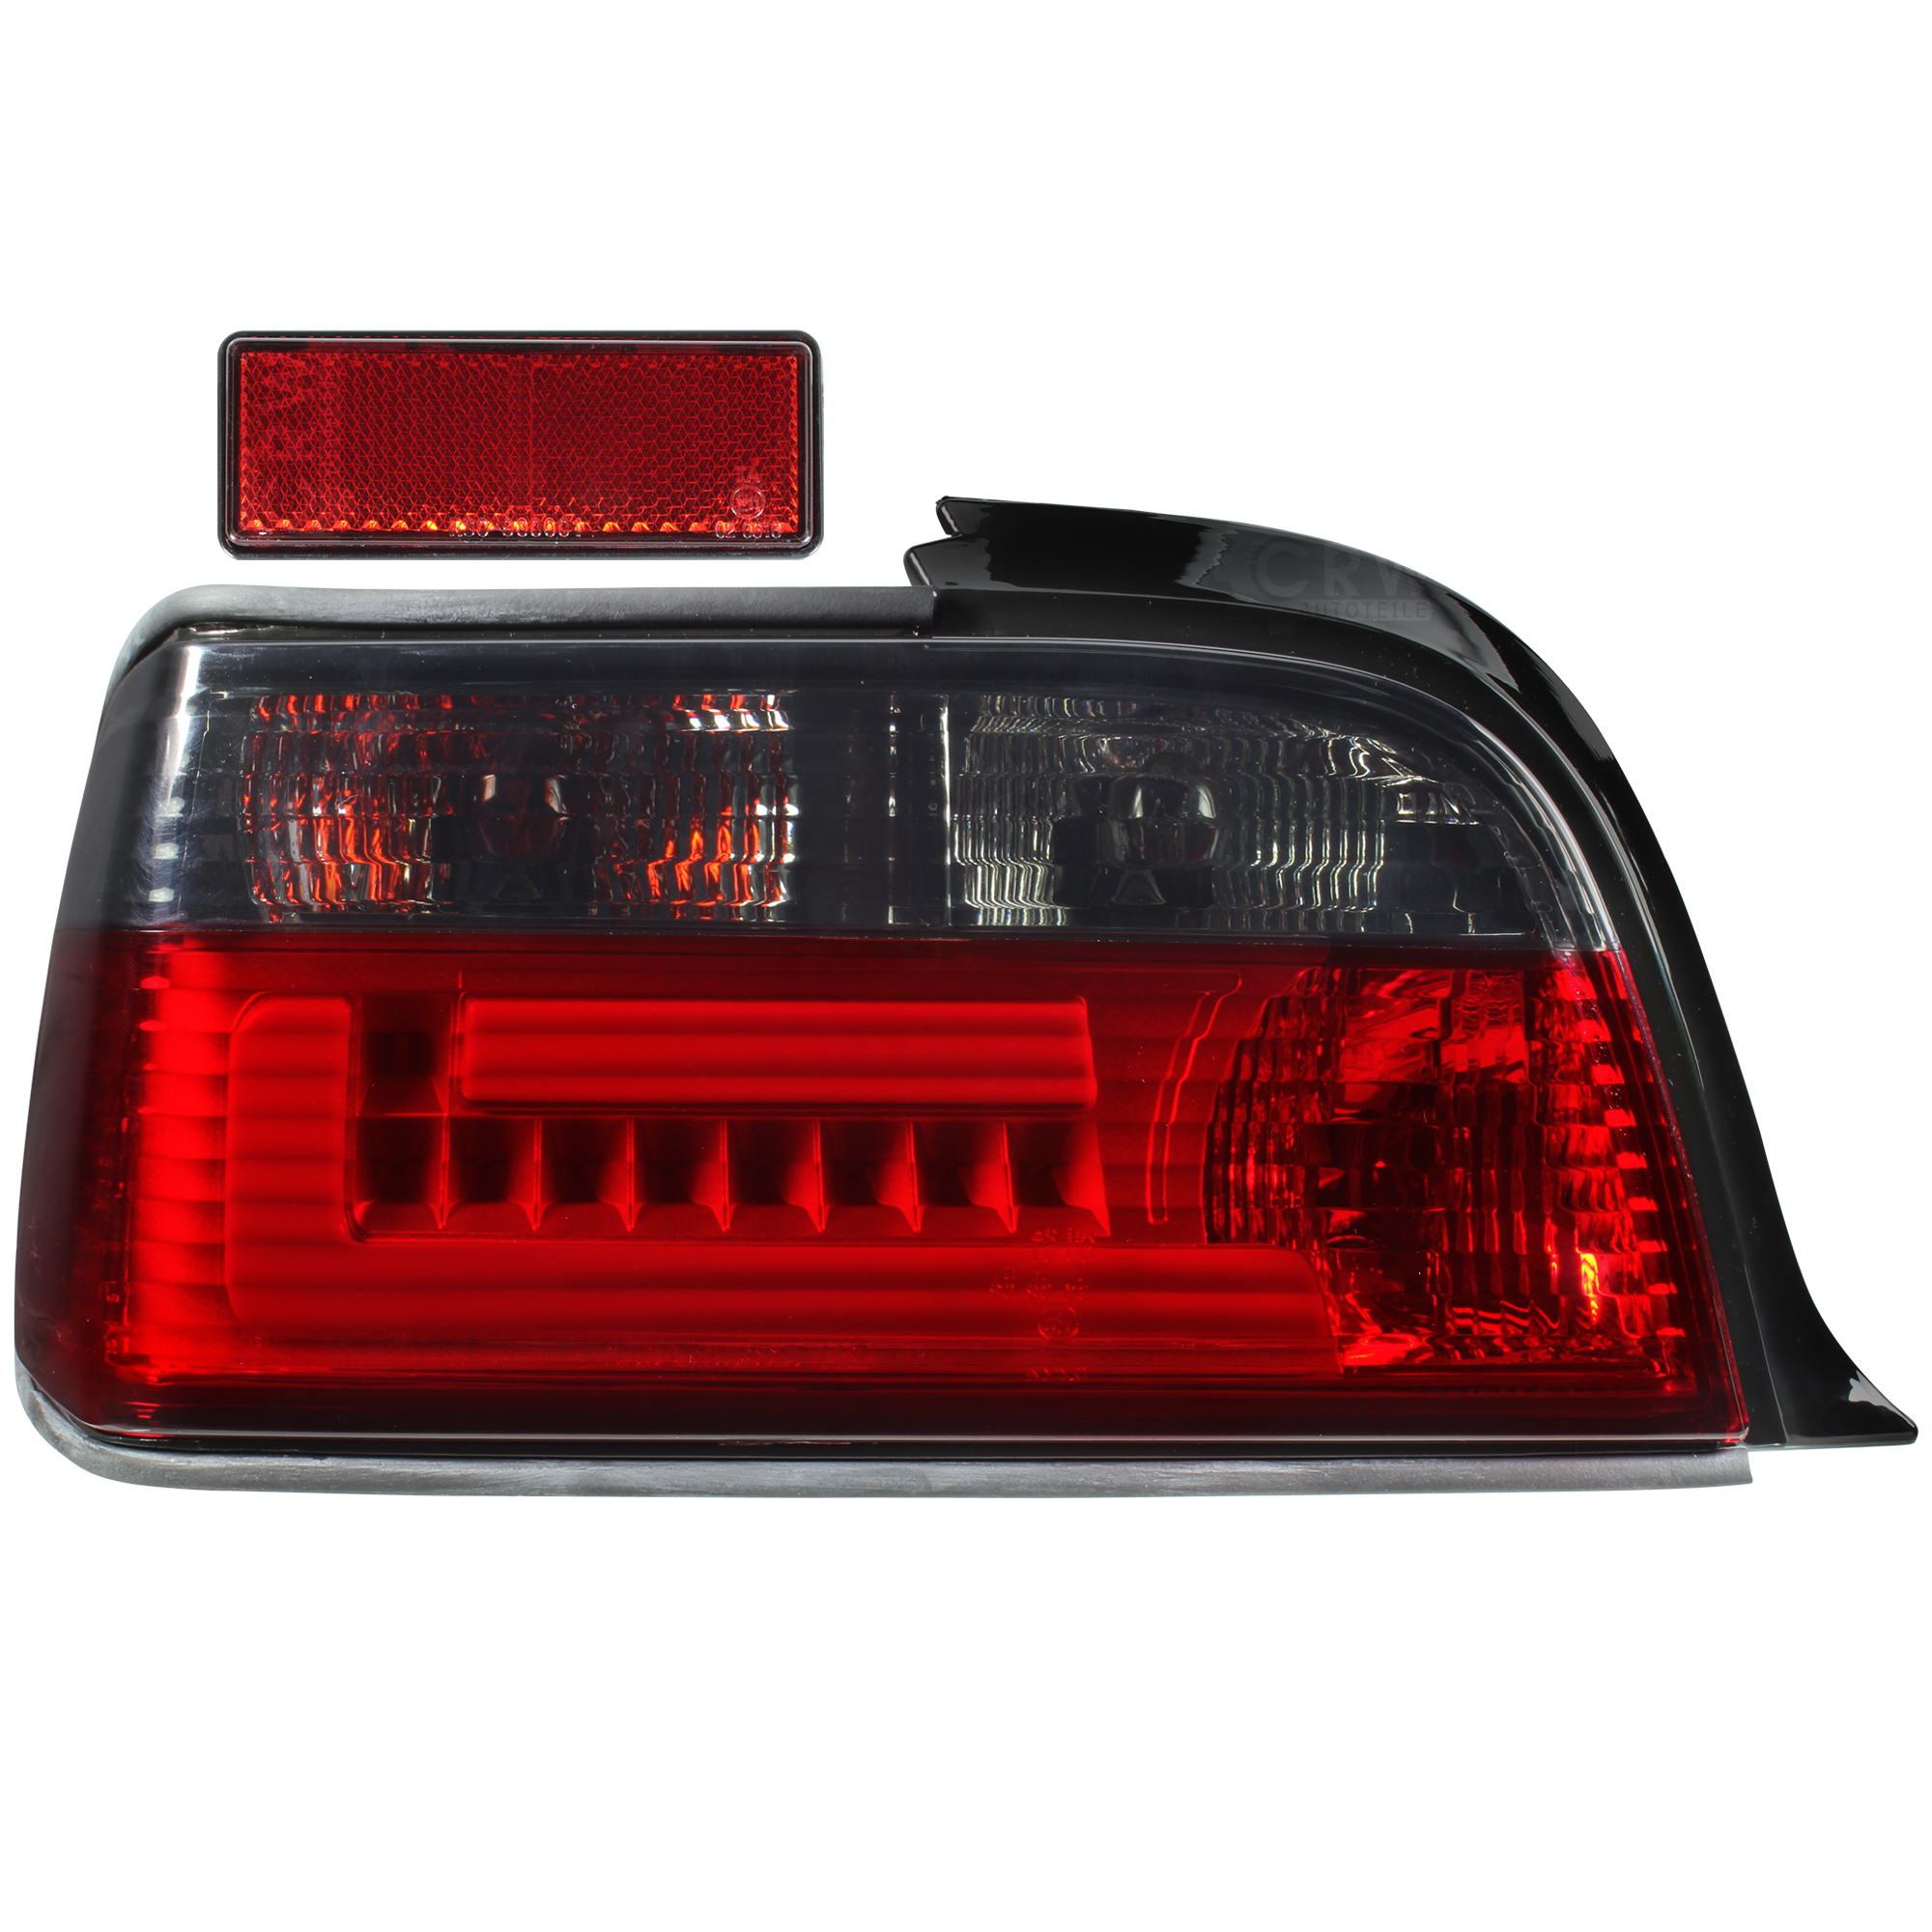 LED Lightbar Rückleuchten Set für BMW E36 90-99 nur Coupe Cabrio klar rot smoke